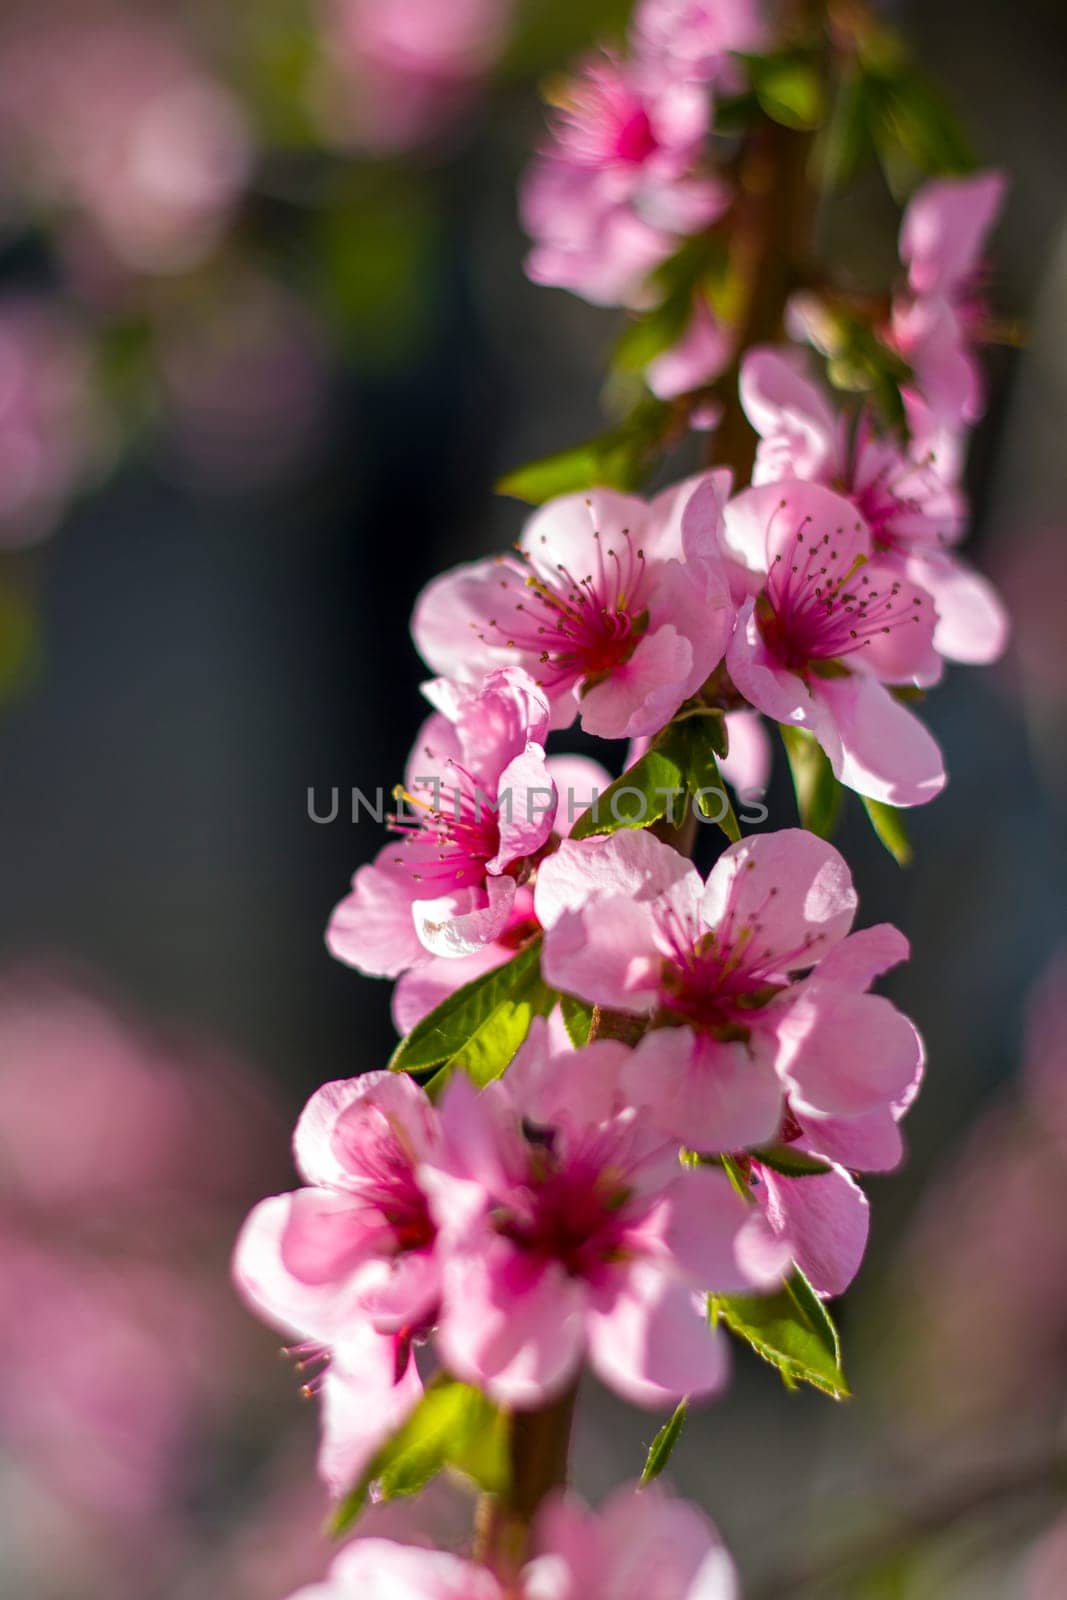 Spring peach nectarine blossom on sunny day tree. Agriculture beautiful season farming springtime landscape